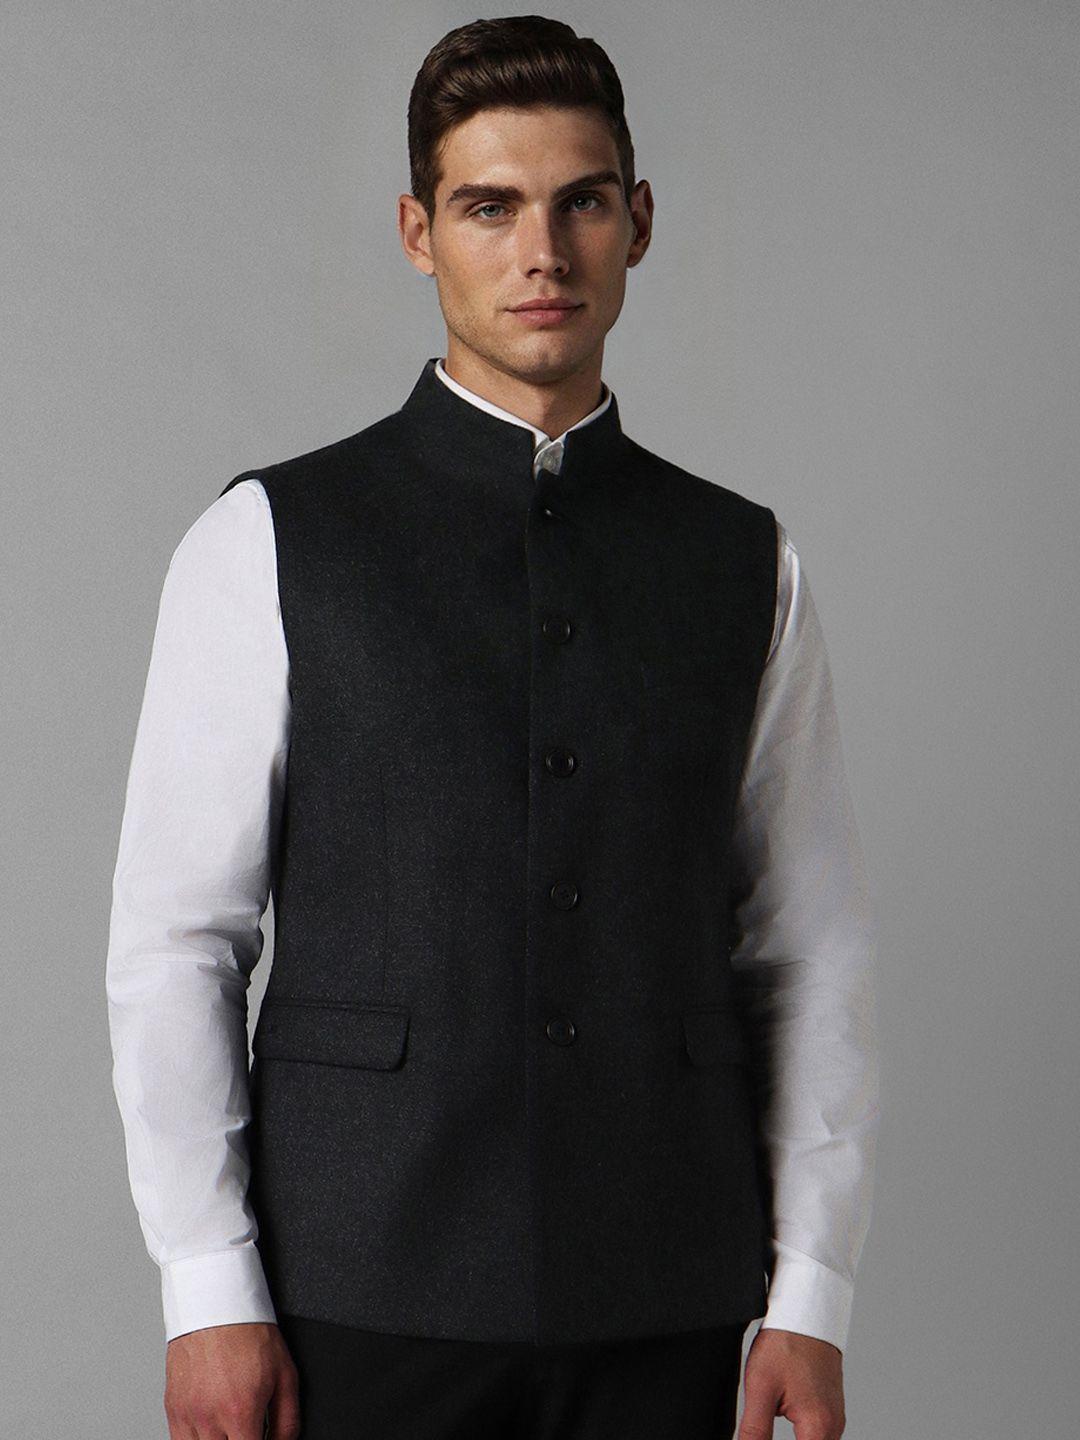 louis-philippe-woven-design-mandarin-collar-pure-woollen-nehru-jacket